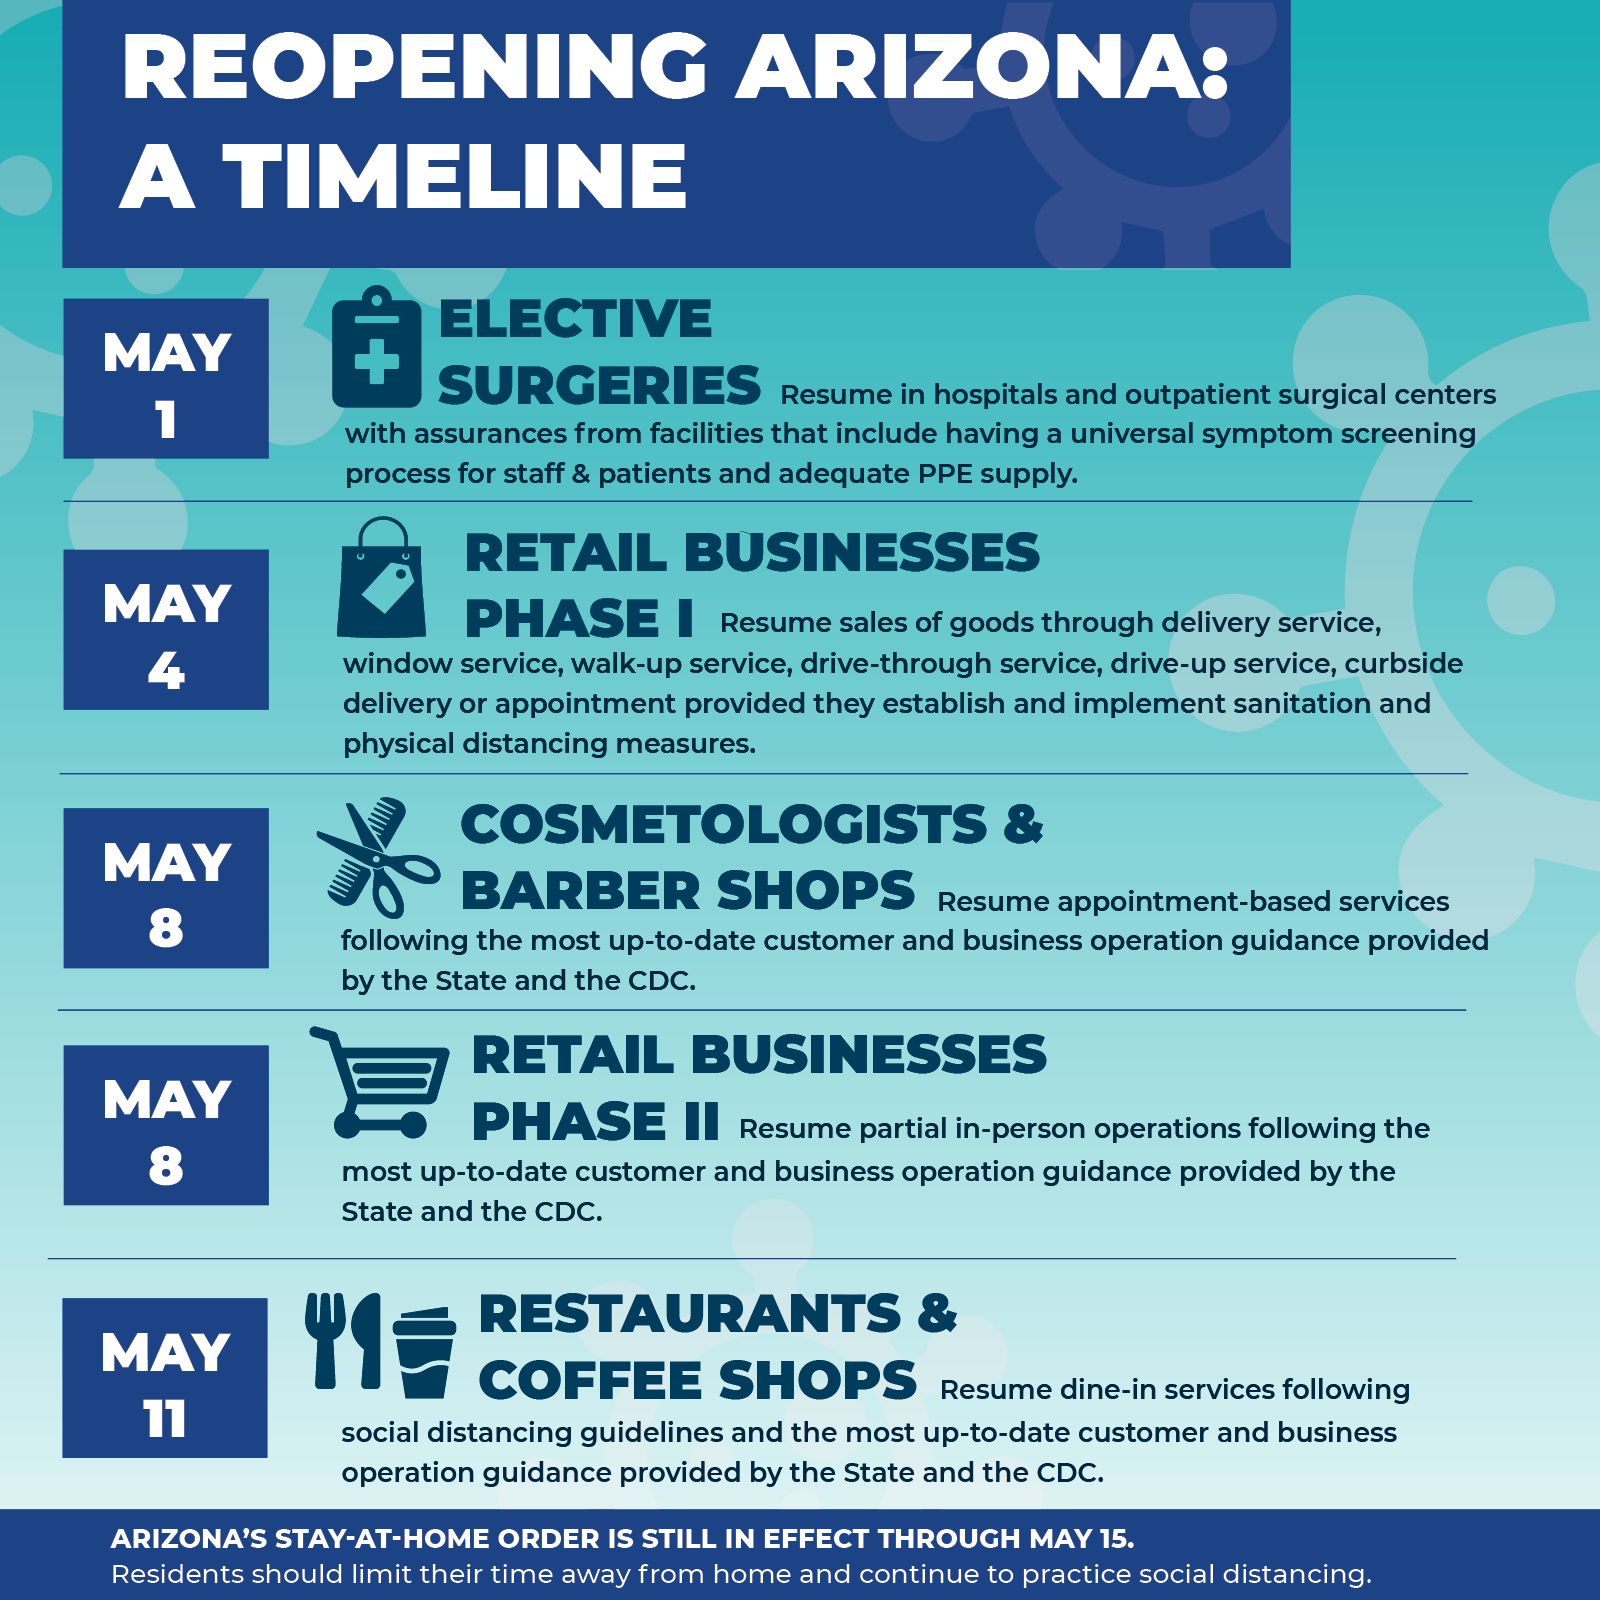 Reopening Arizona: A Timeline